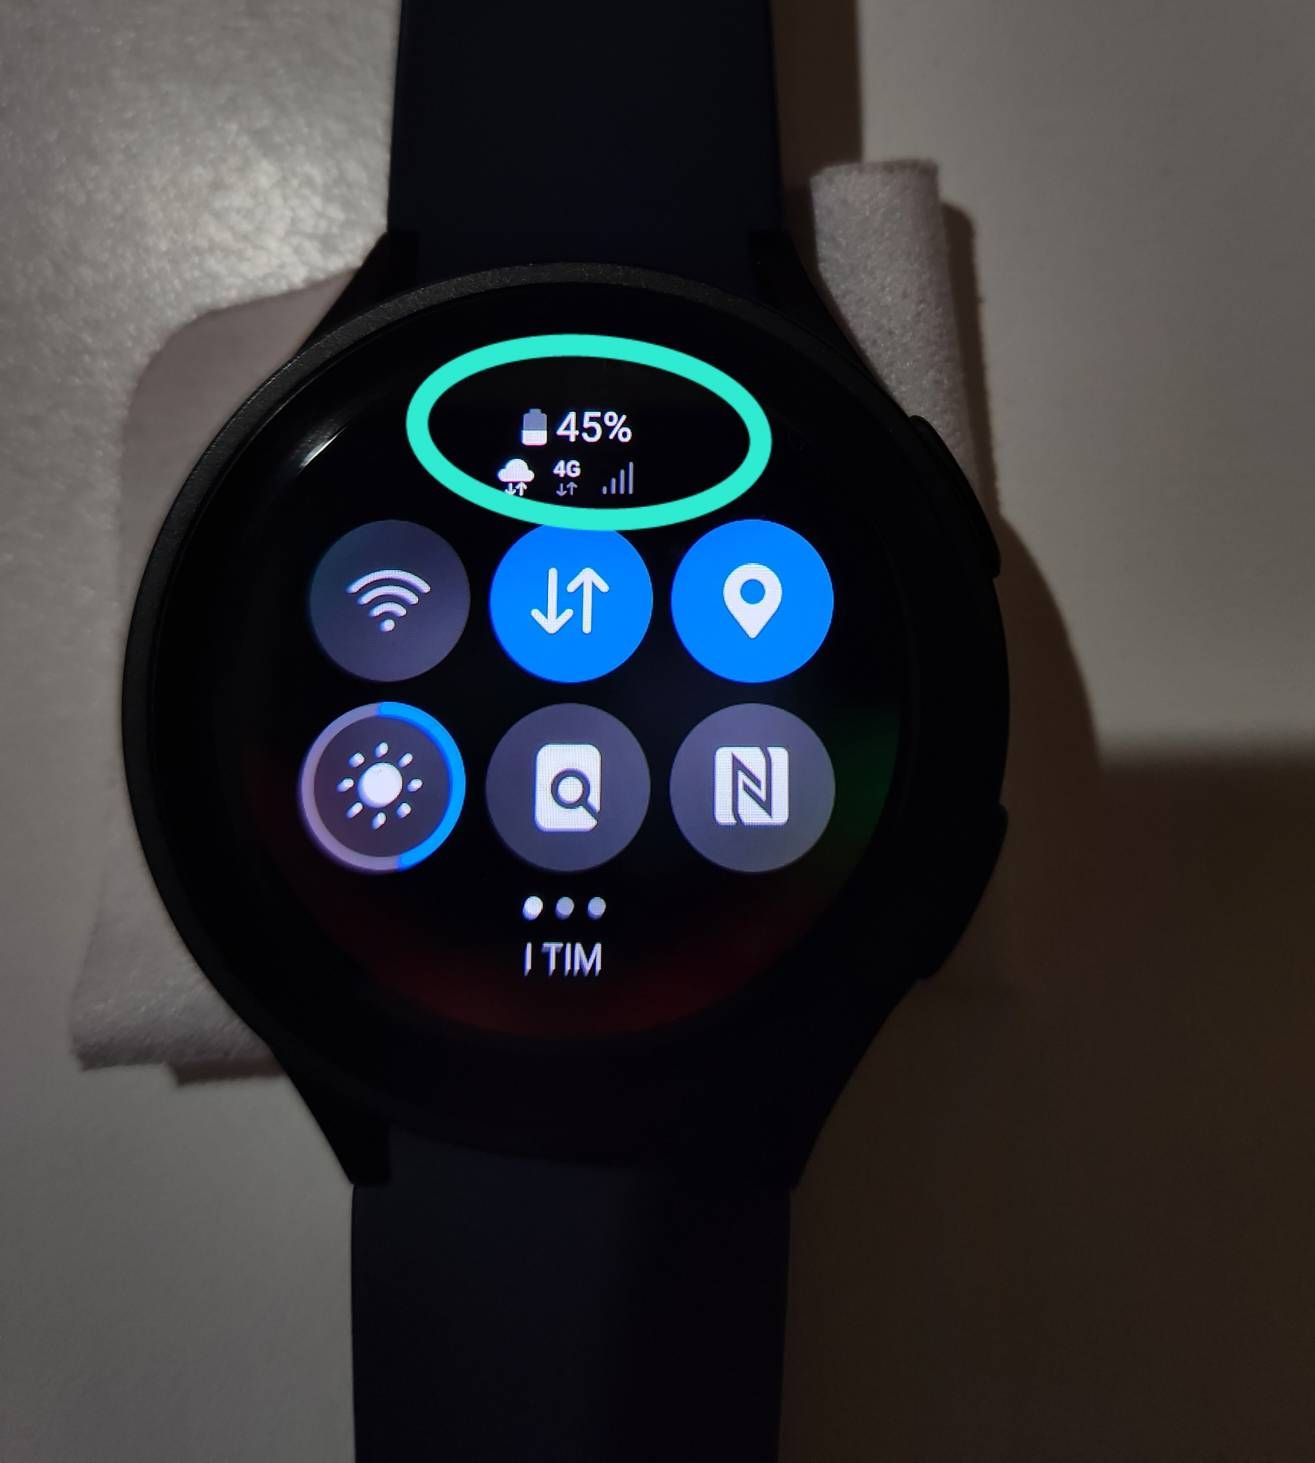 Galaxy watch 5 pro lte - Samsung Community